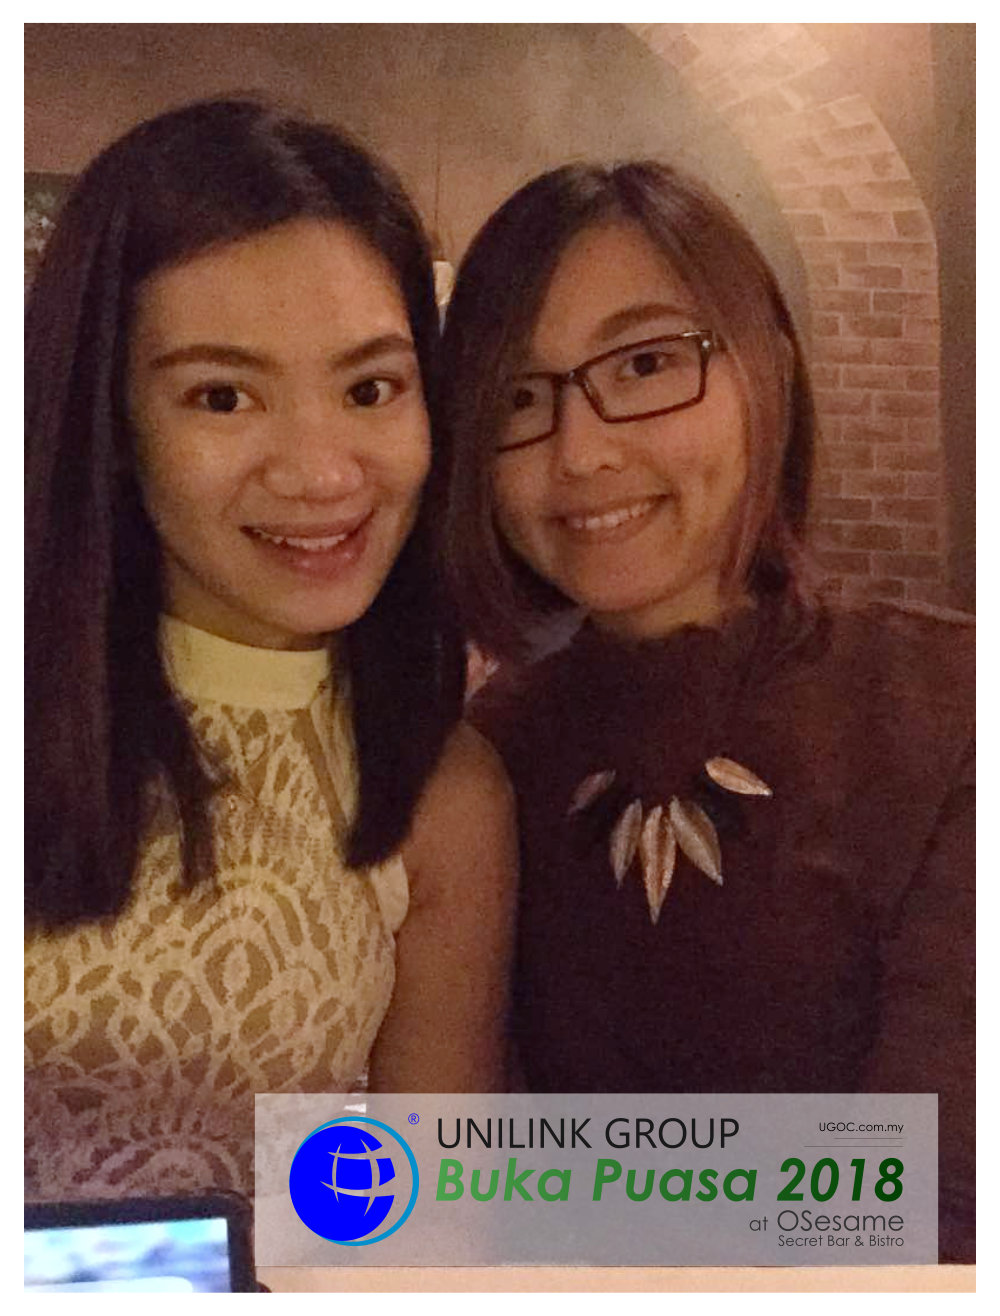 Unilink Group Buka Puasa Dinner 2018 Selamat Hari Raya Aidilfitri from Agensi Pekerjaan Unilink Prospects Sdn Bhd at Osesame Secret Bar and Bistro 38